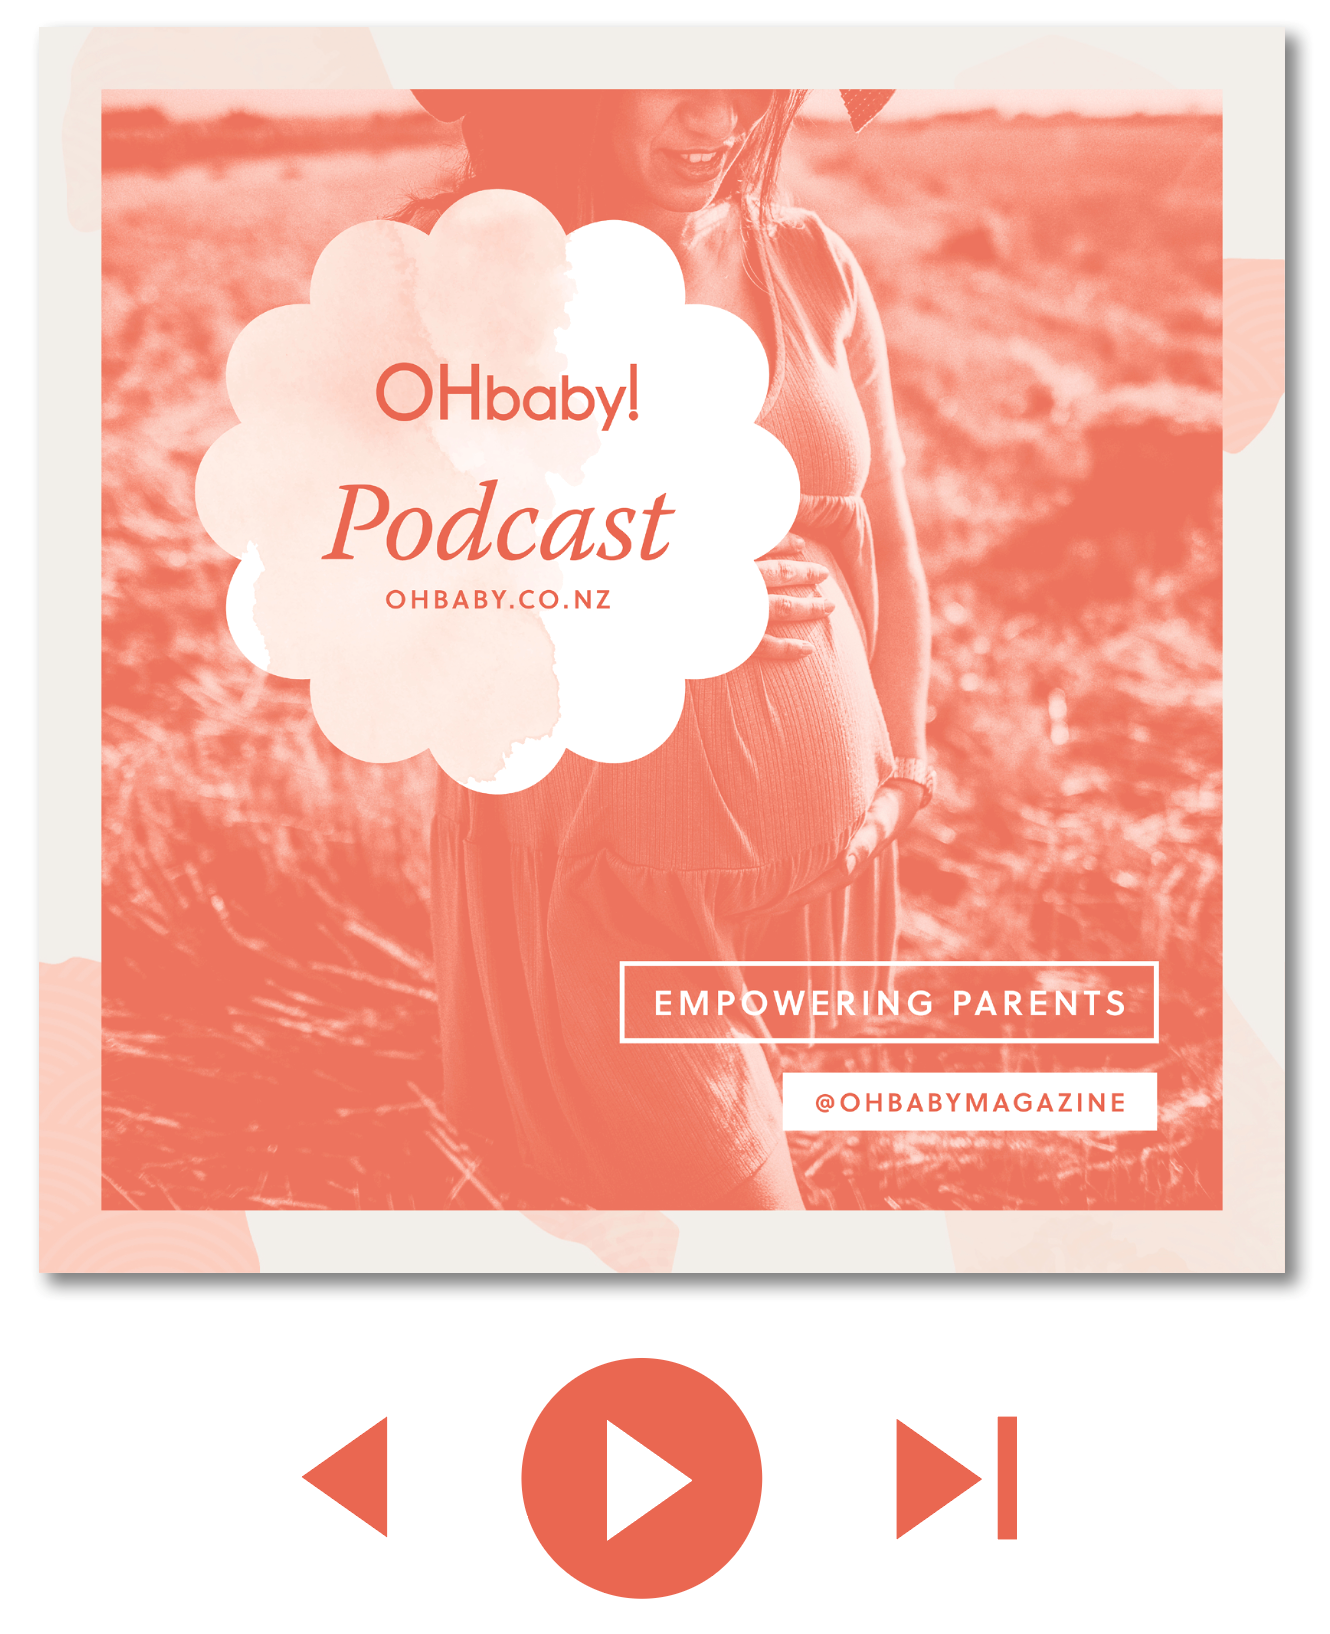 OHbaby! Podcast